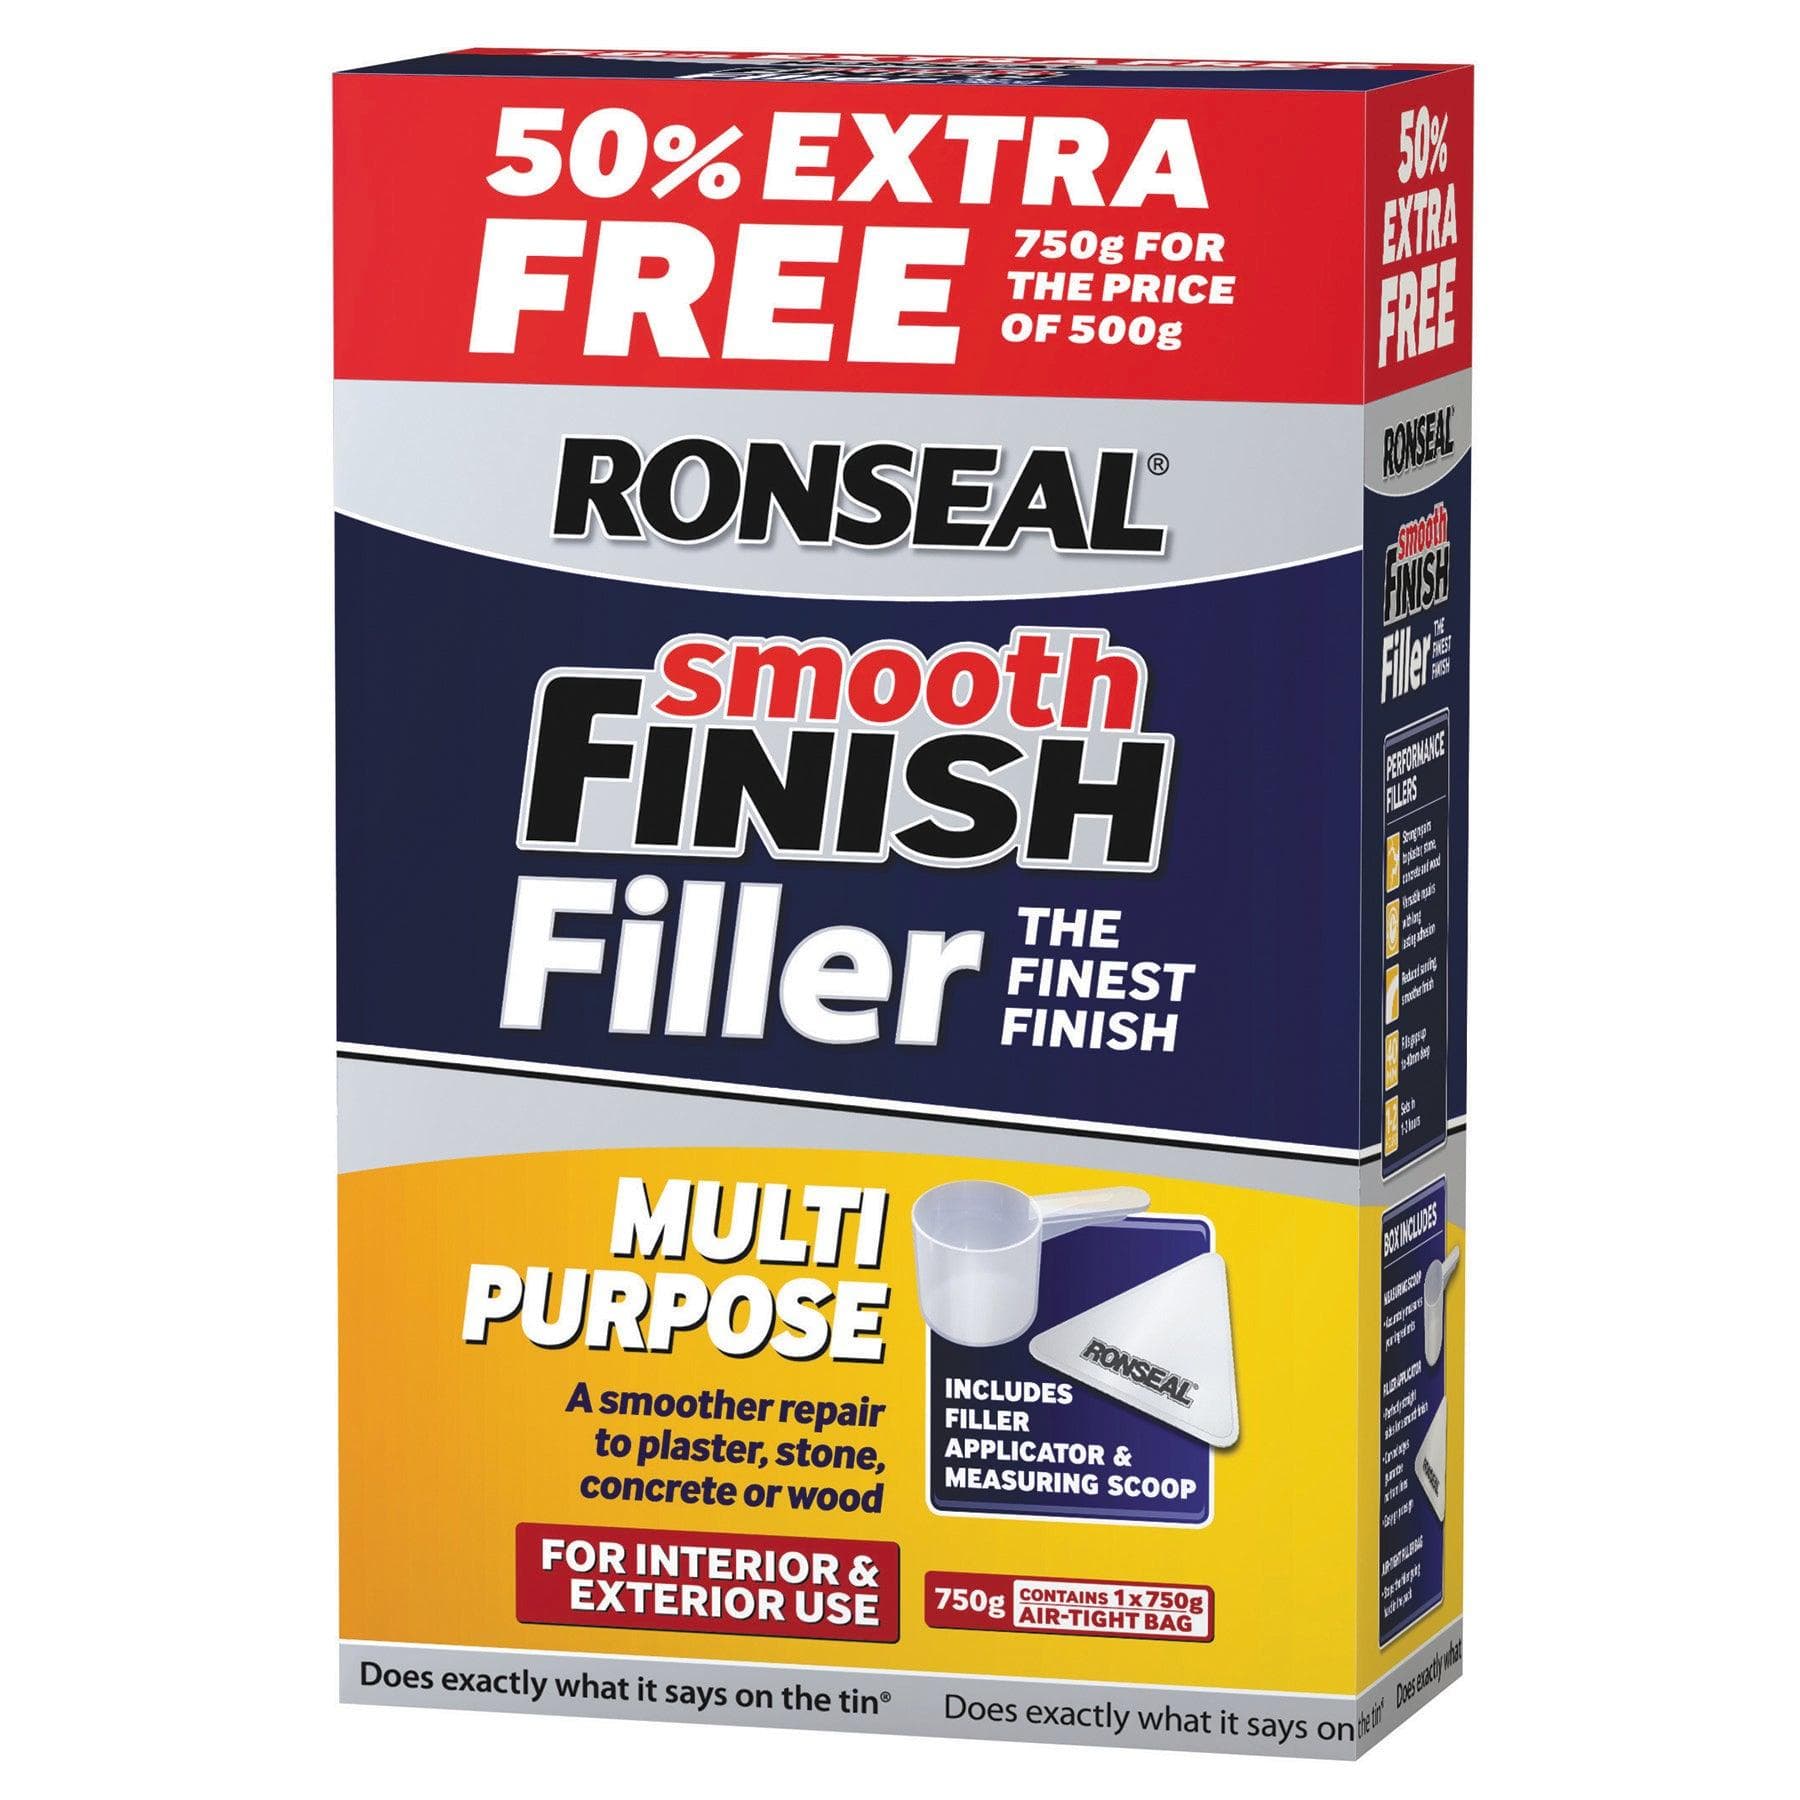 Ronseal Multi Purpose Wall Filler 550g+50% - General Hardware Supplies Homevalue